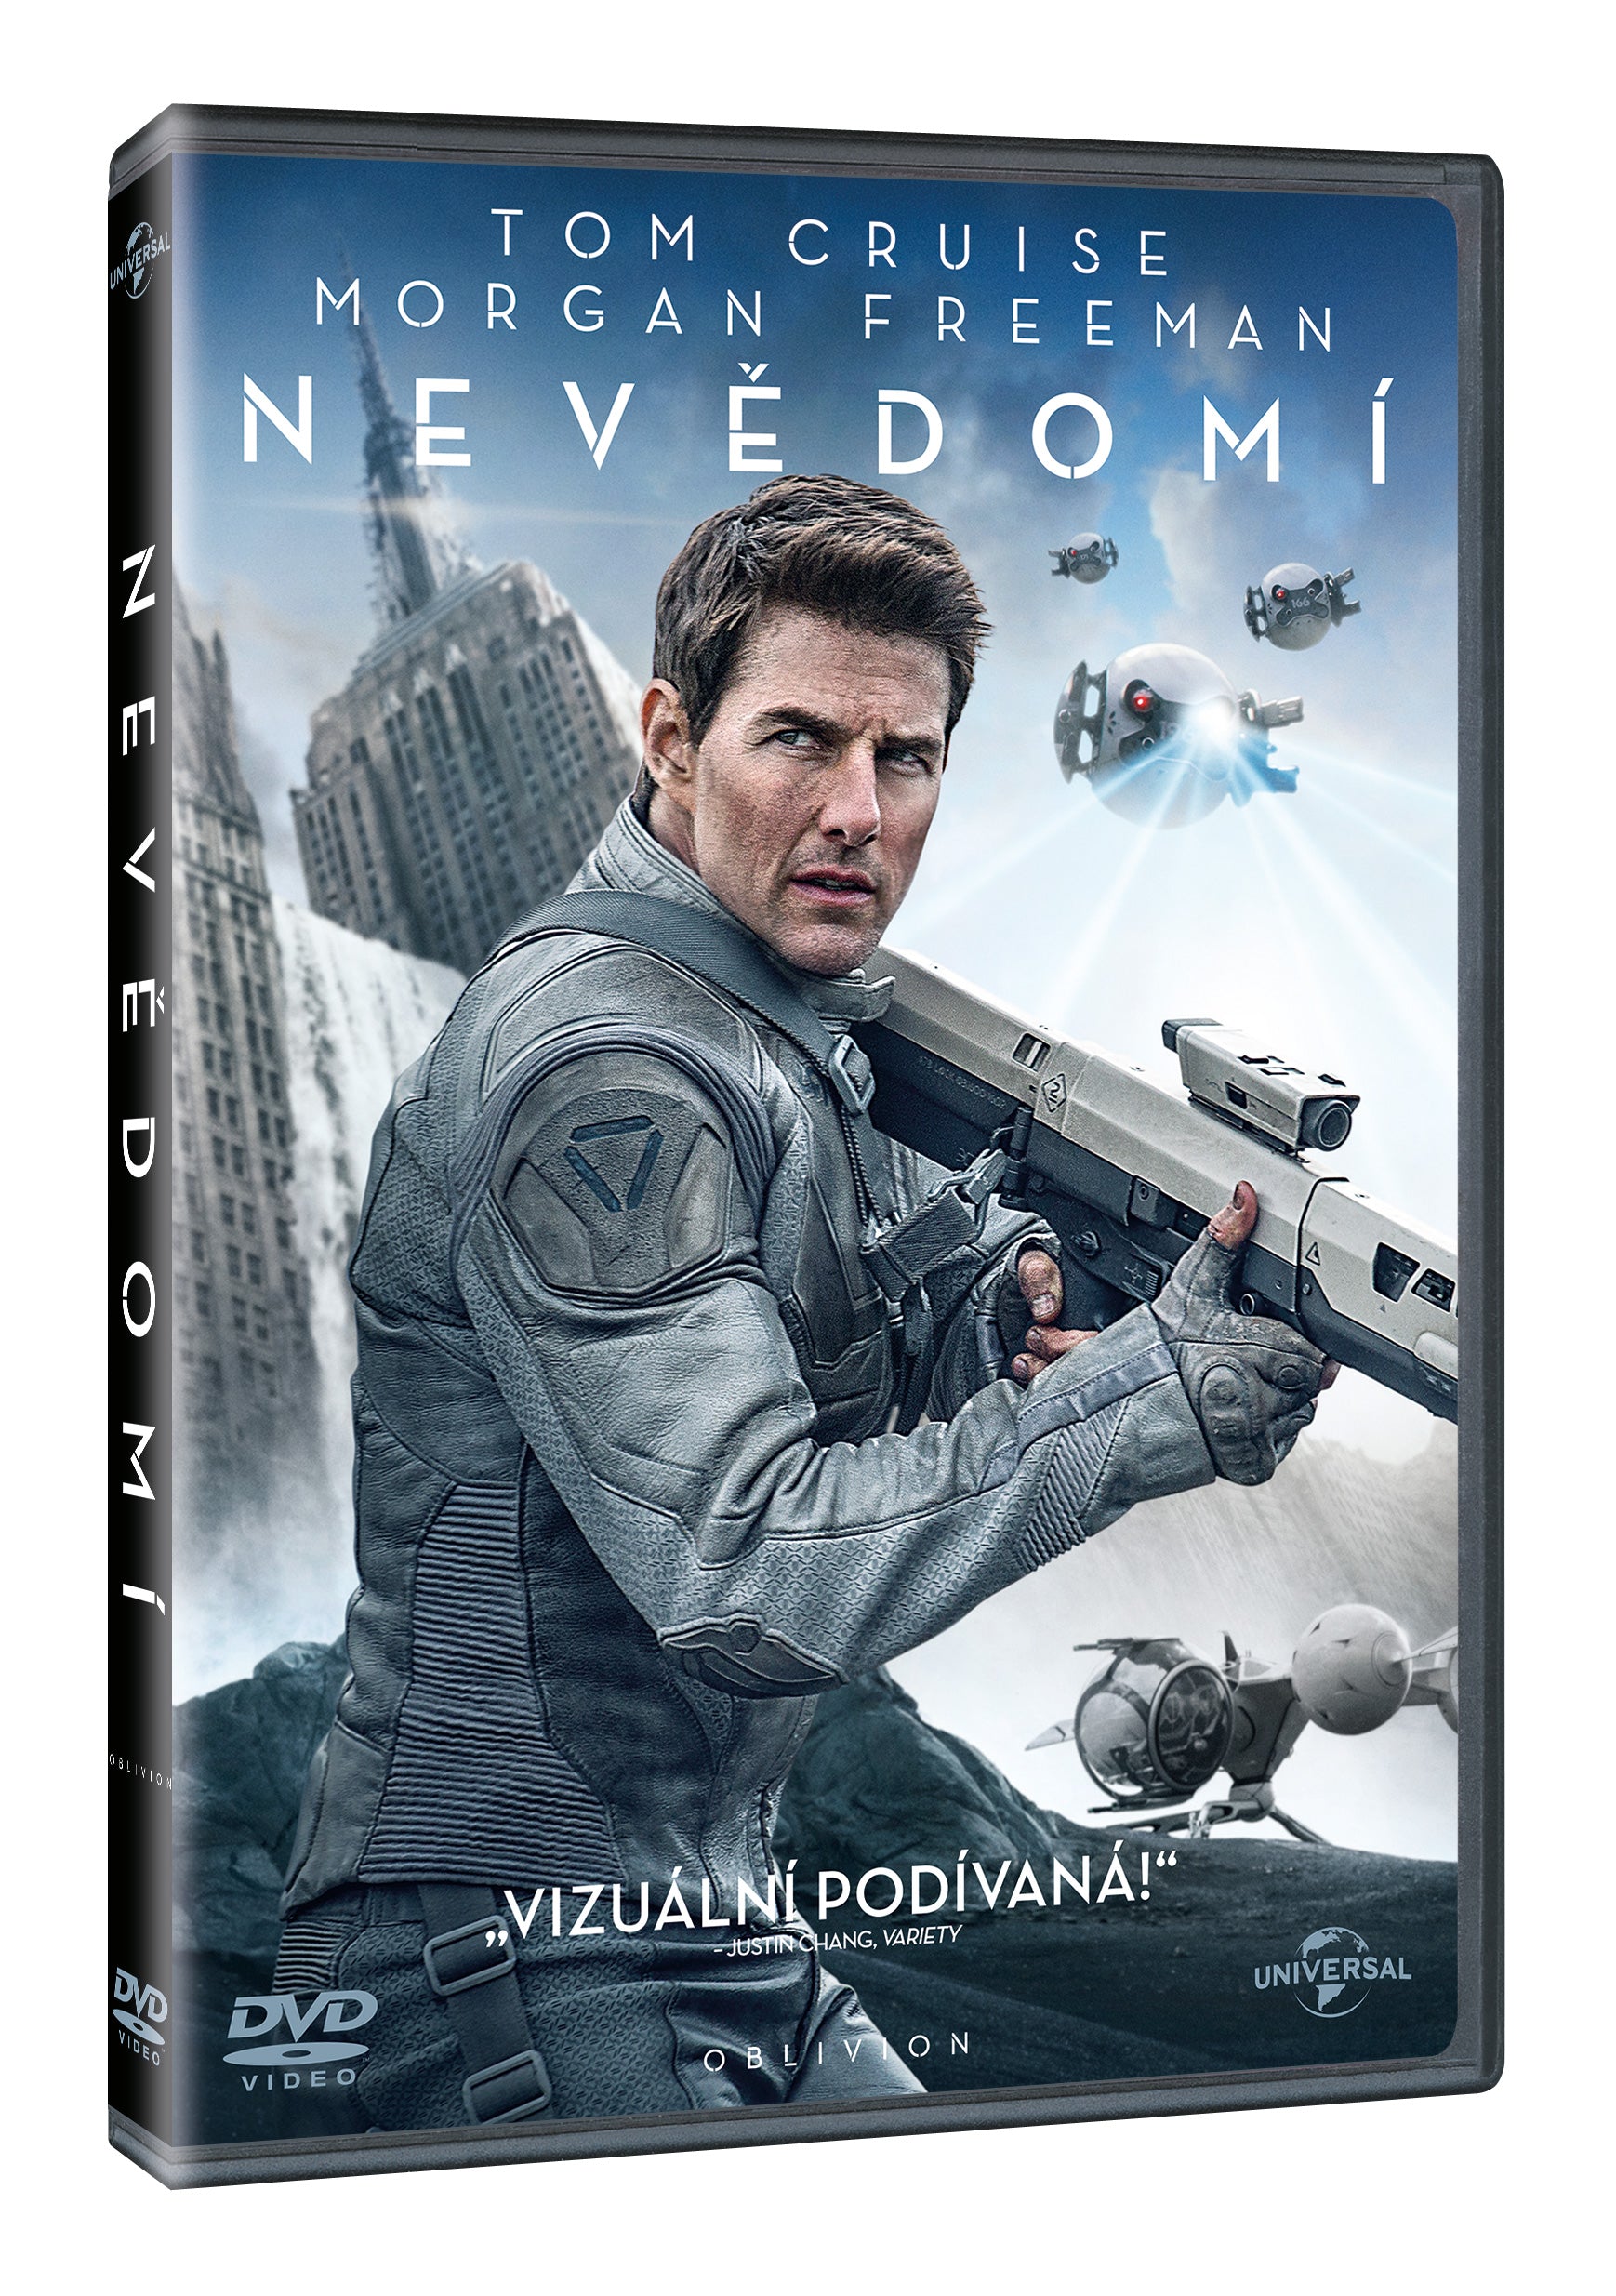 Nevedomi DVD / Oblivion